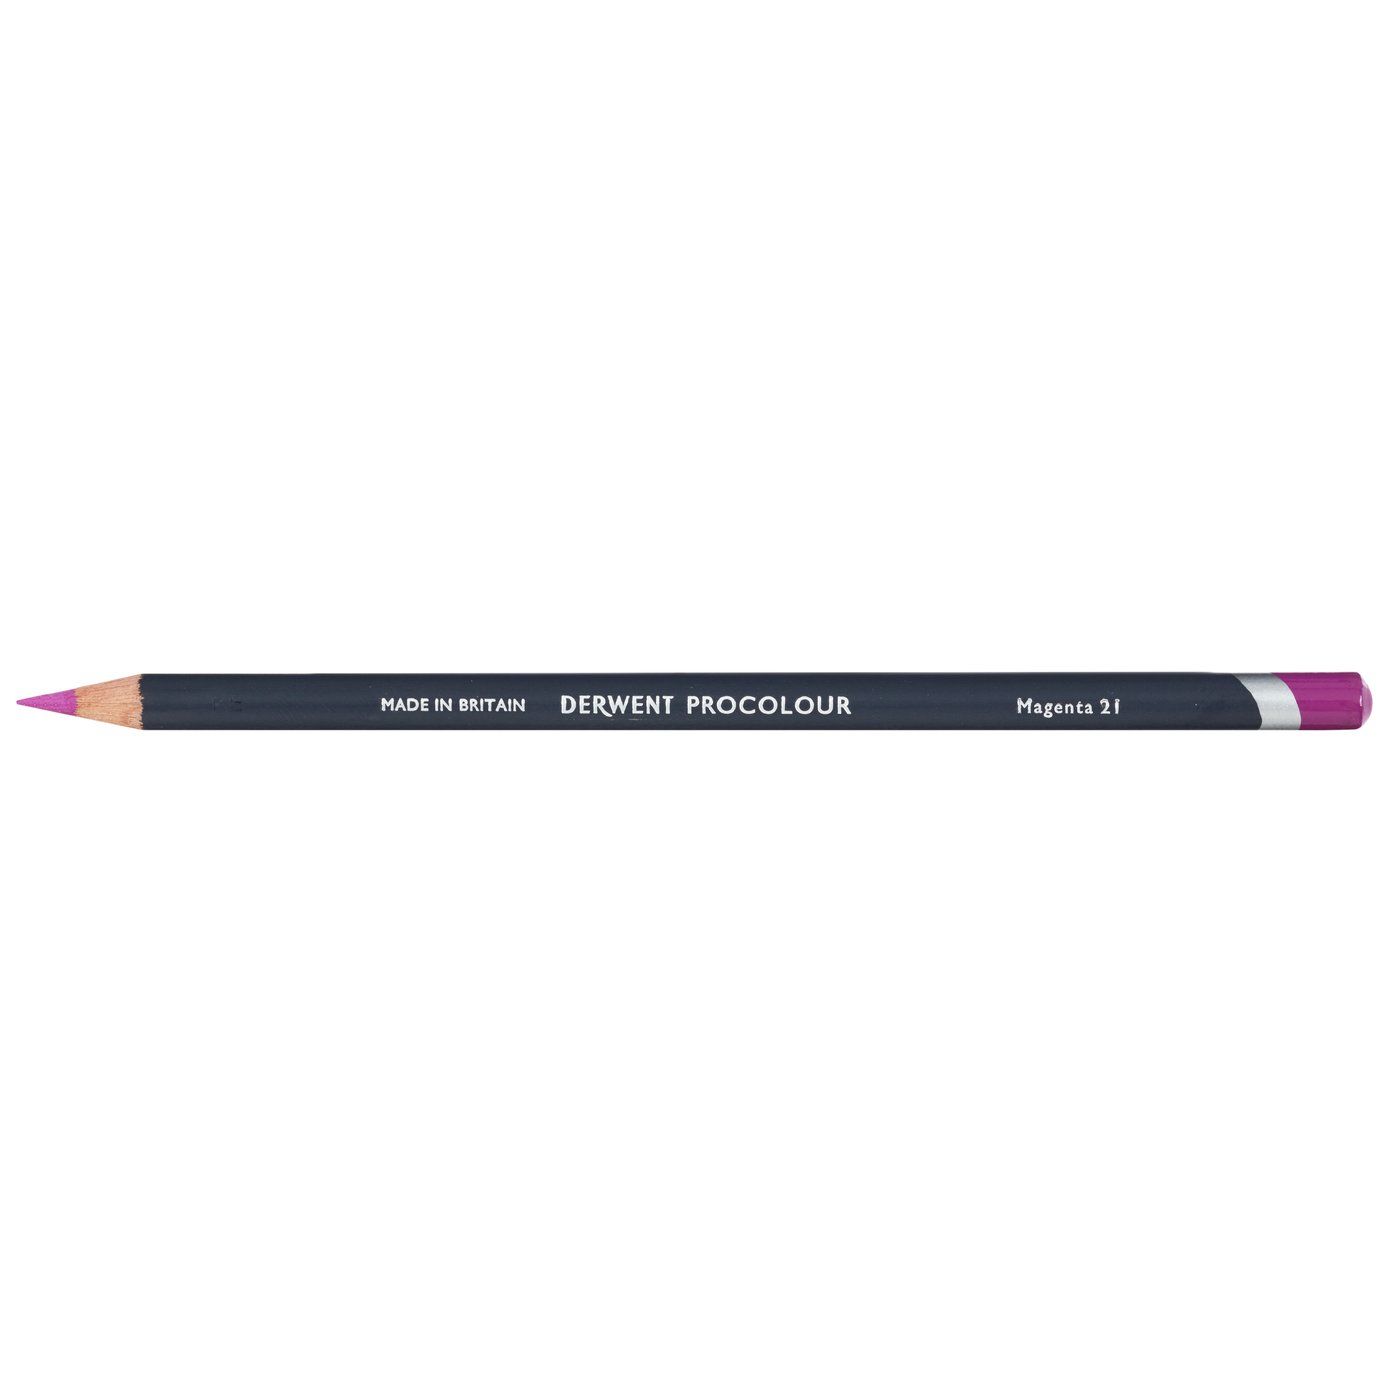 Derwent Procolour Pencil - 21 Magenta